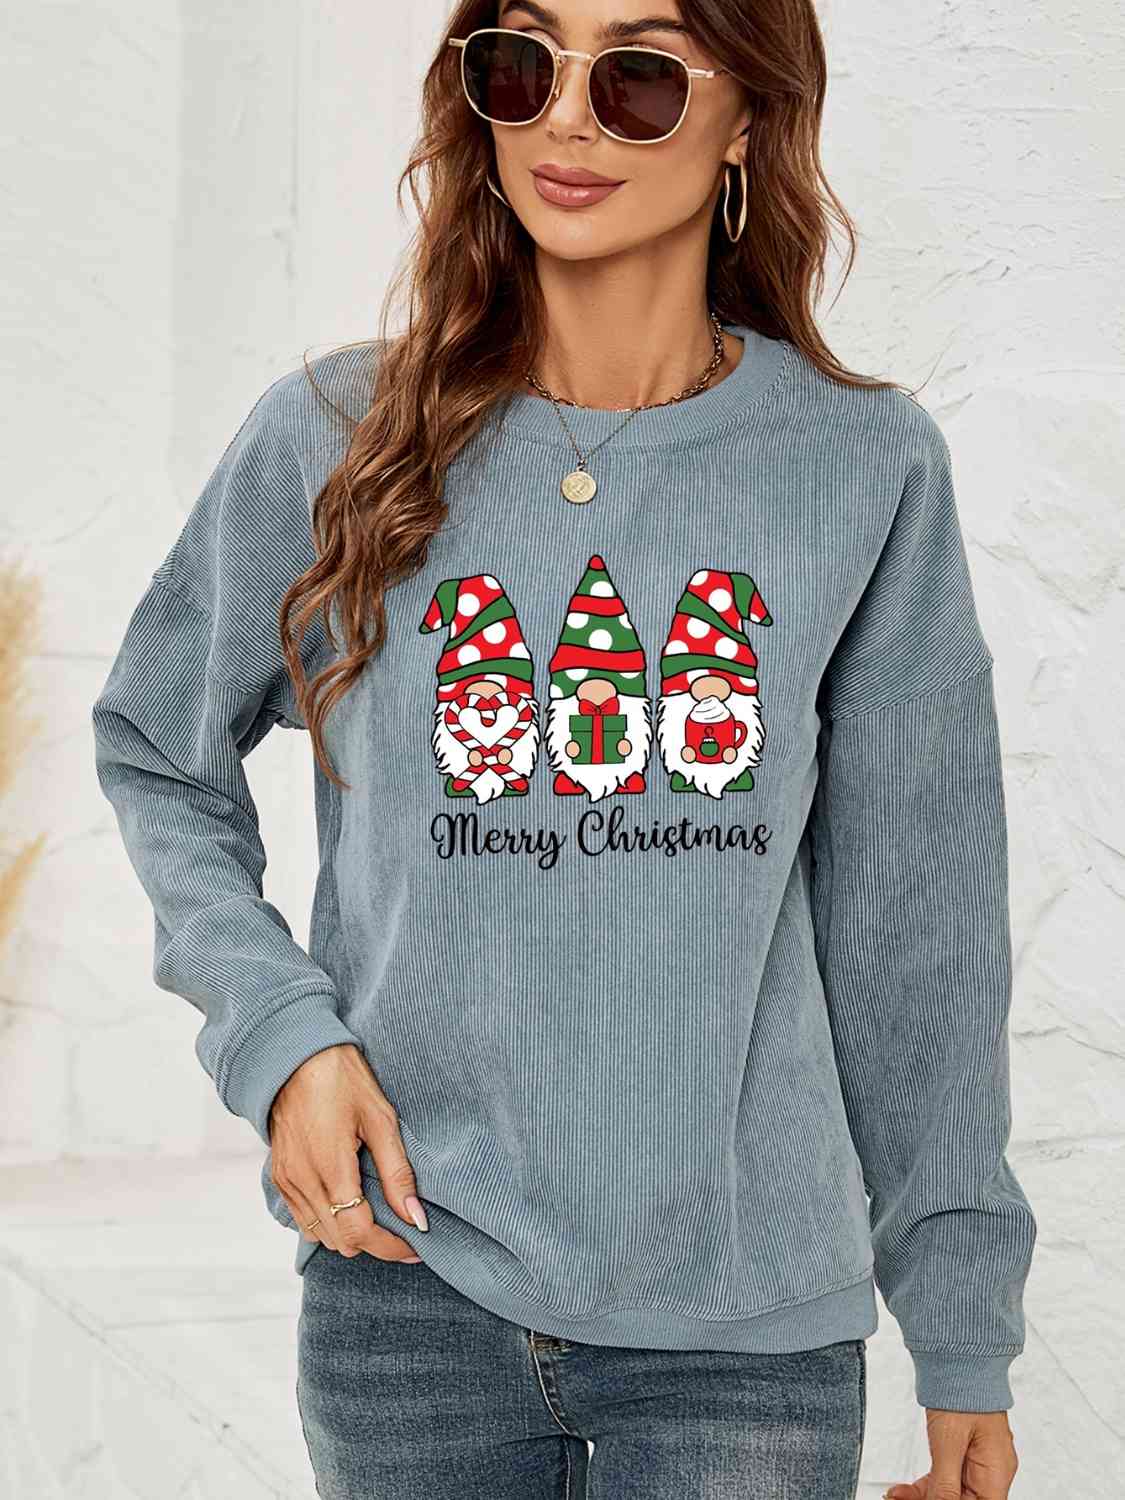 MERRY CHRISTMAS Graphic Sweatshirt - Guy Christopher